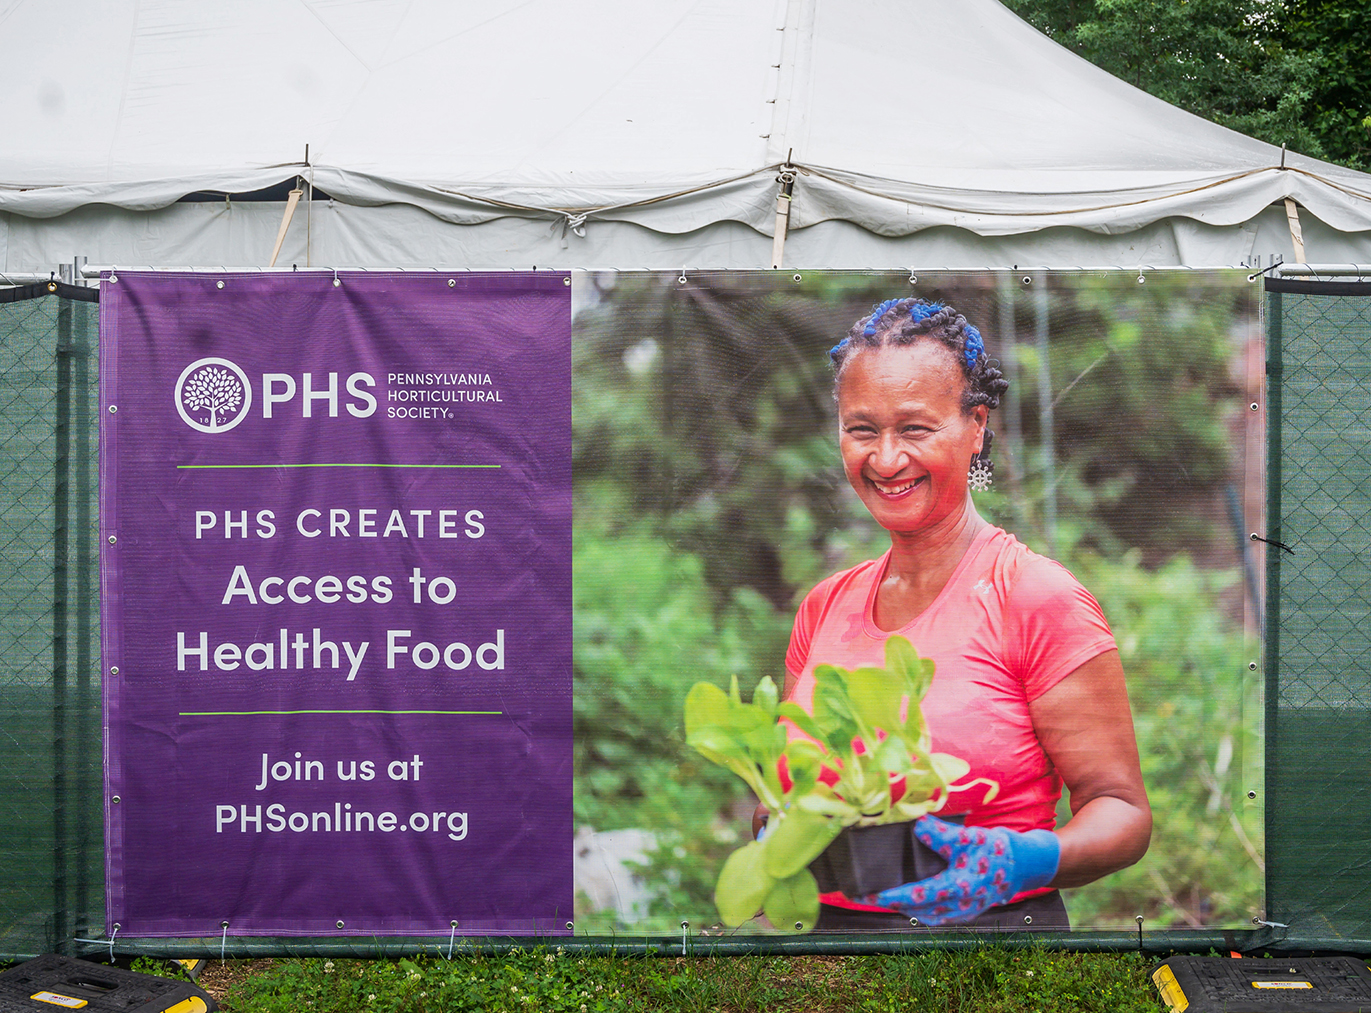 PHS membership signage at the 2021 PHS Philadelphia Flower Show.